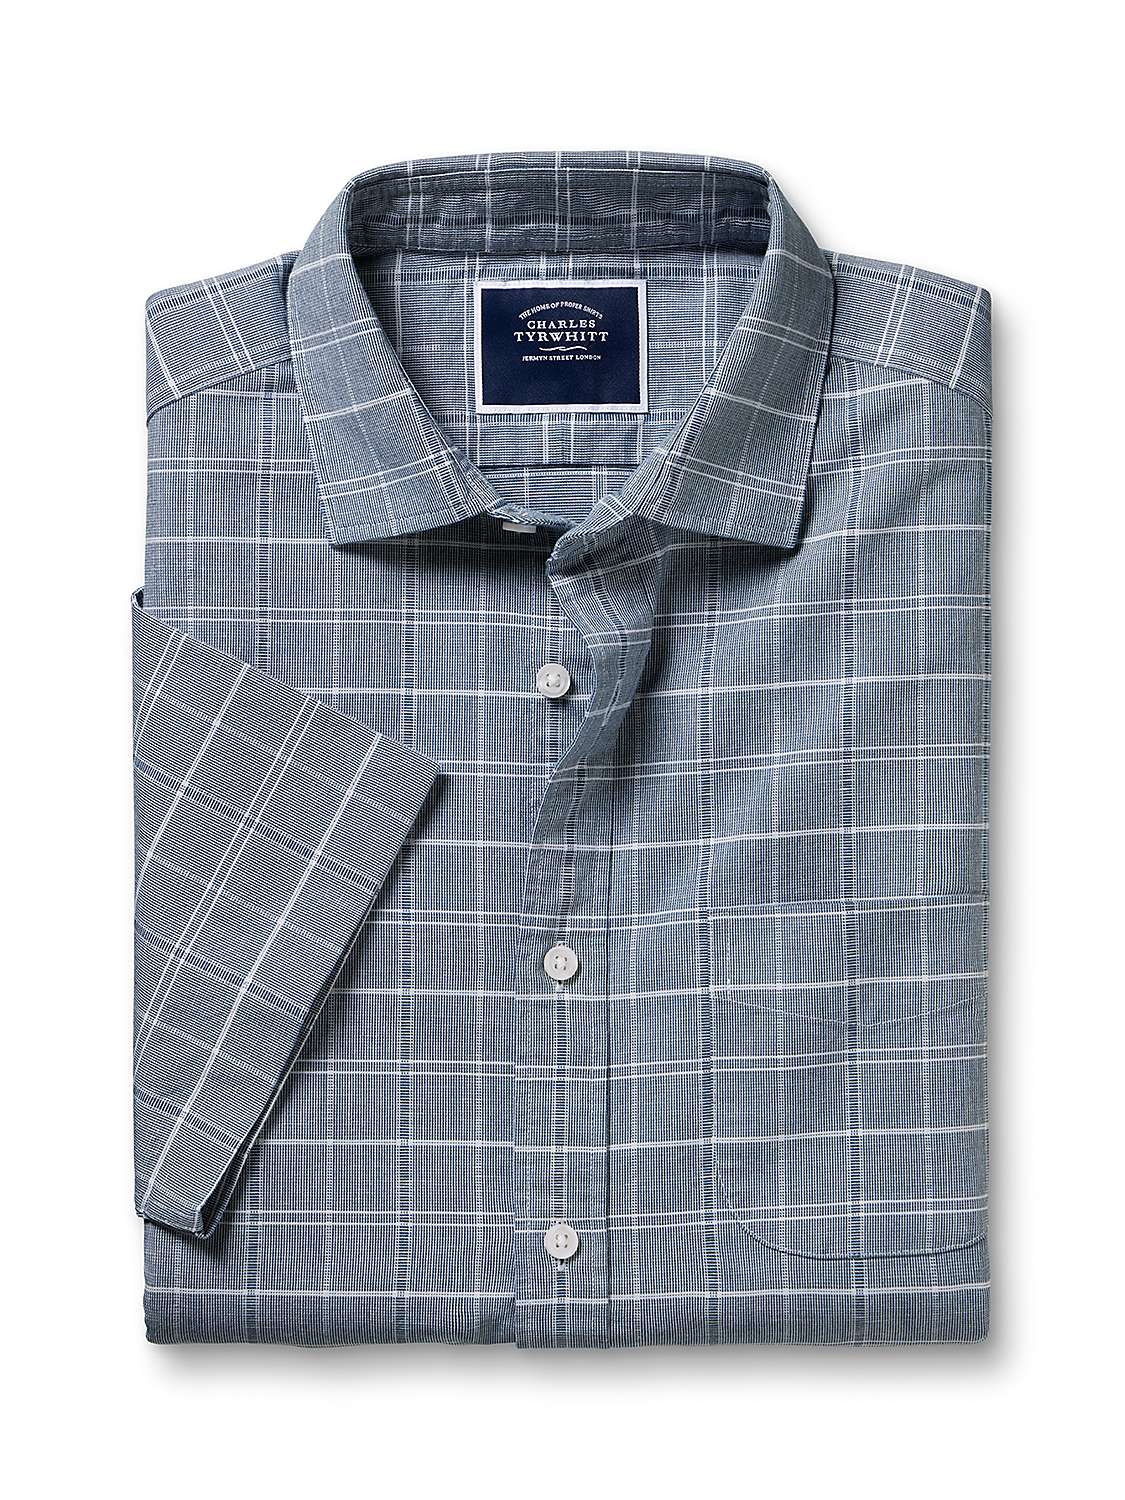 Charles Tyrwhitt Short Sleeve Check Cotton Shirt, Blue at John Lewis ...